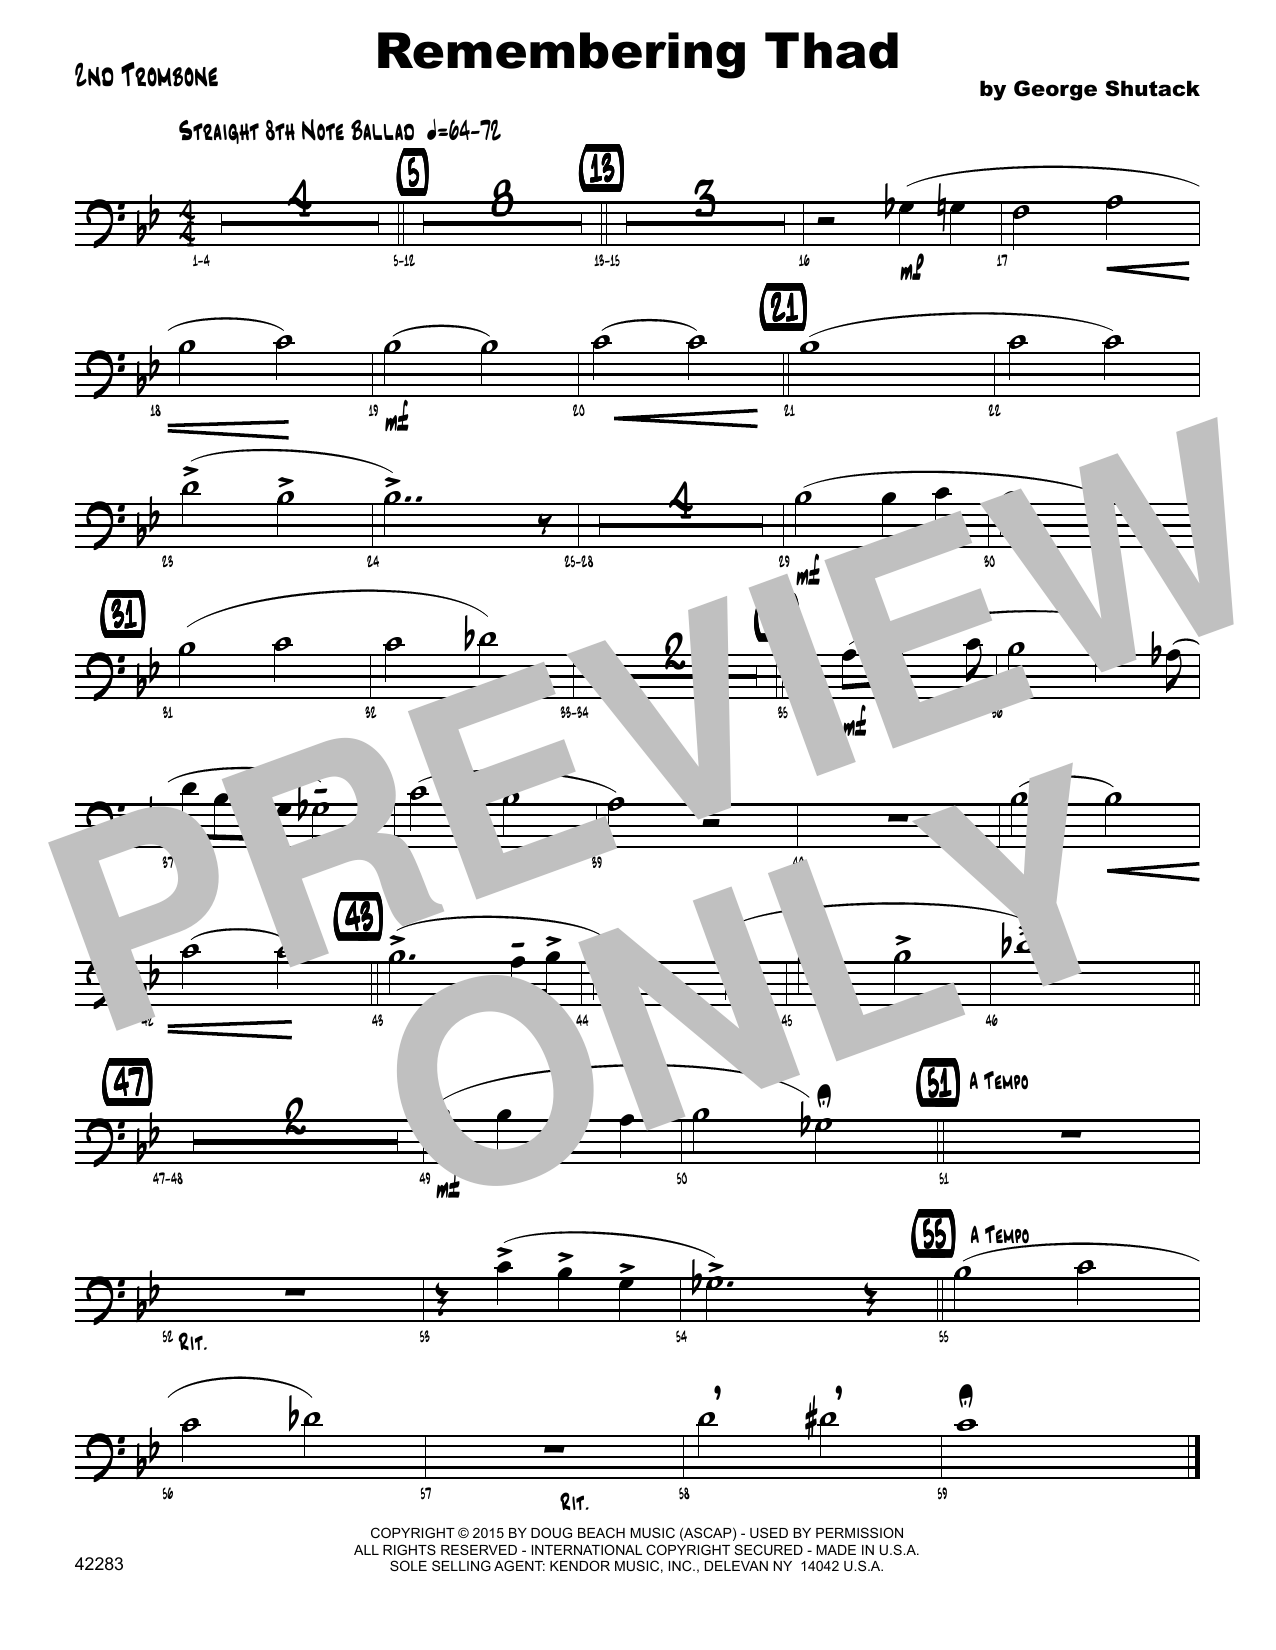 Download George Shutack Remembering Thad - 2nd Trombone Sheet Music